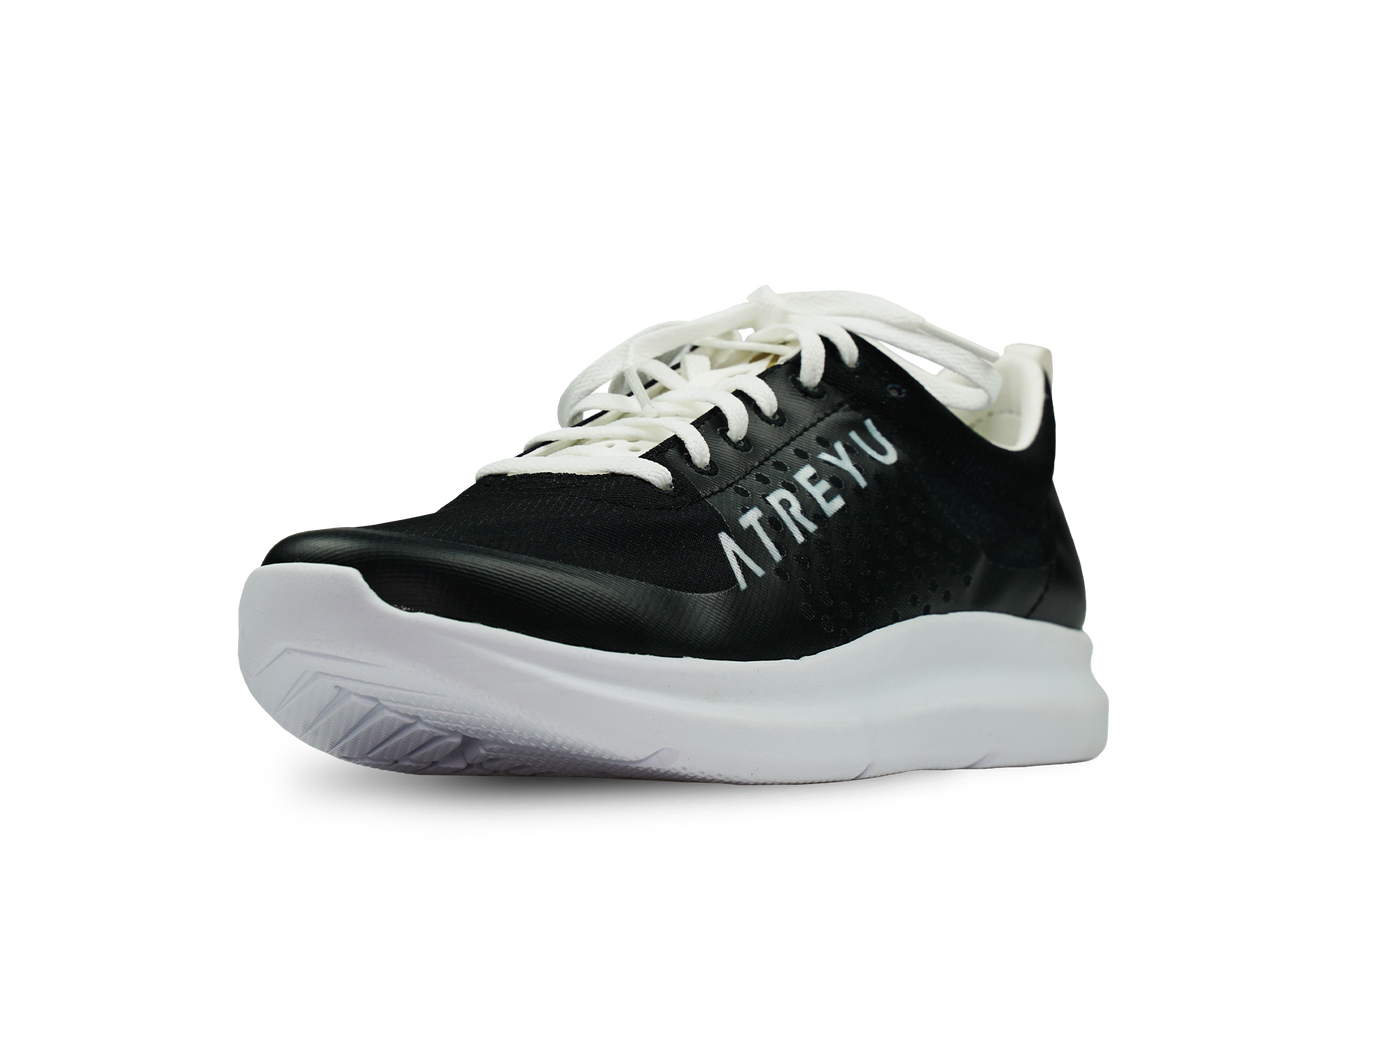 Atreyu Base Model - Lightweight running shoes angle black